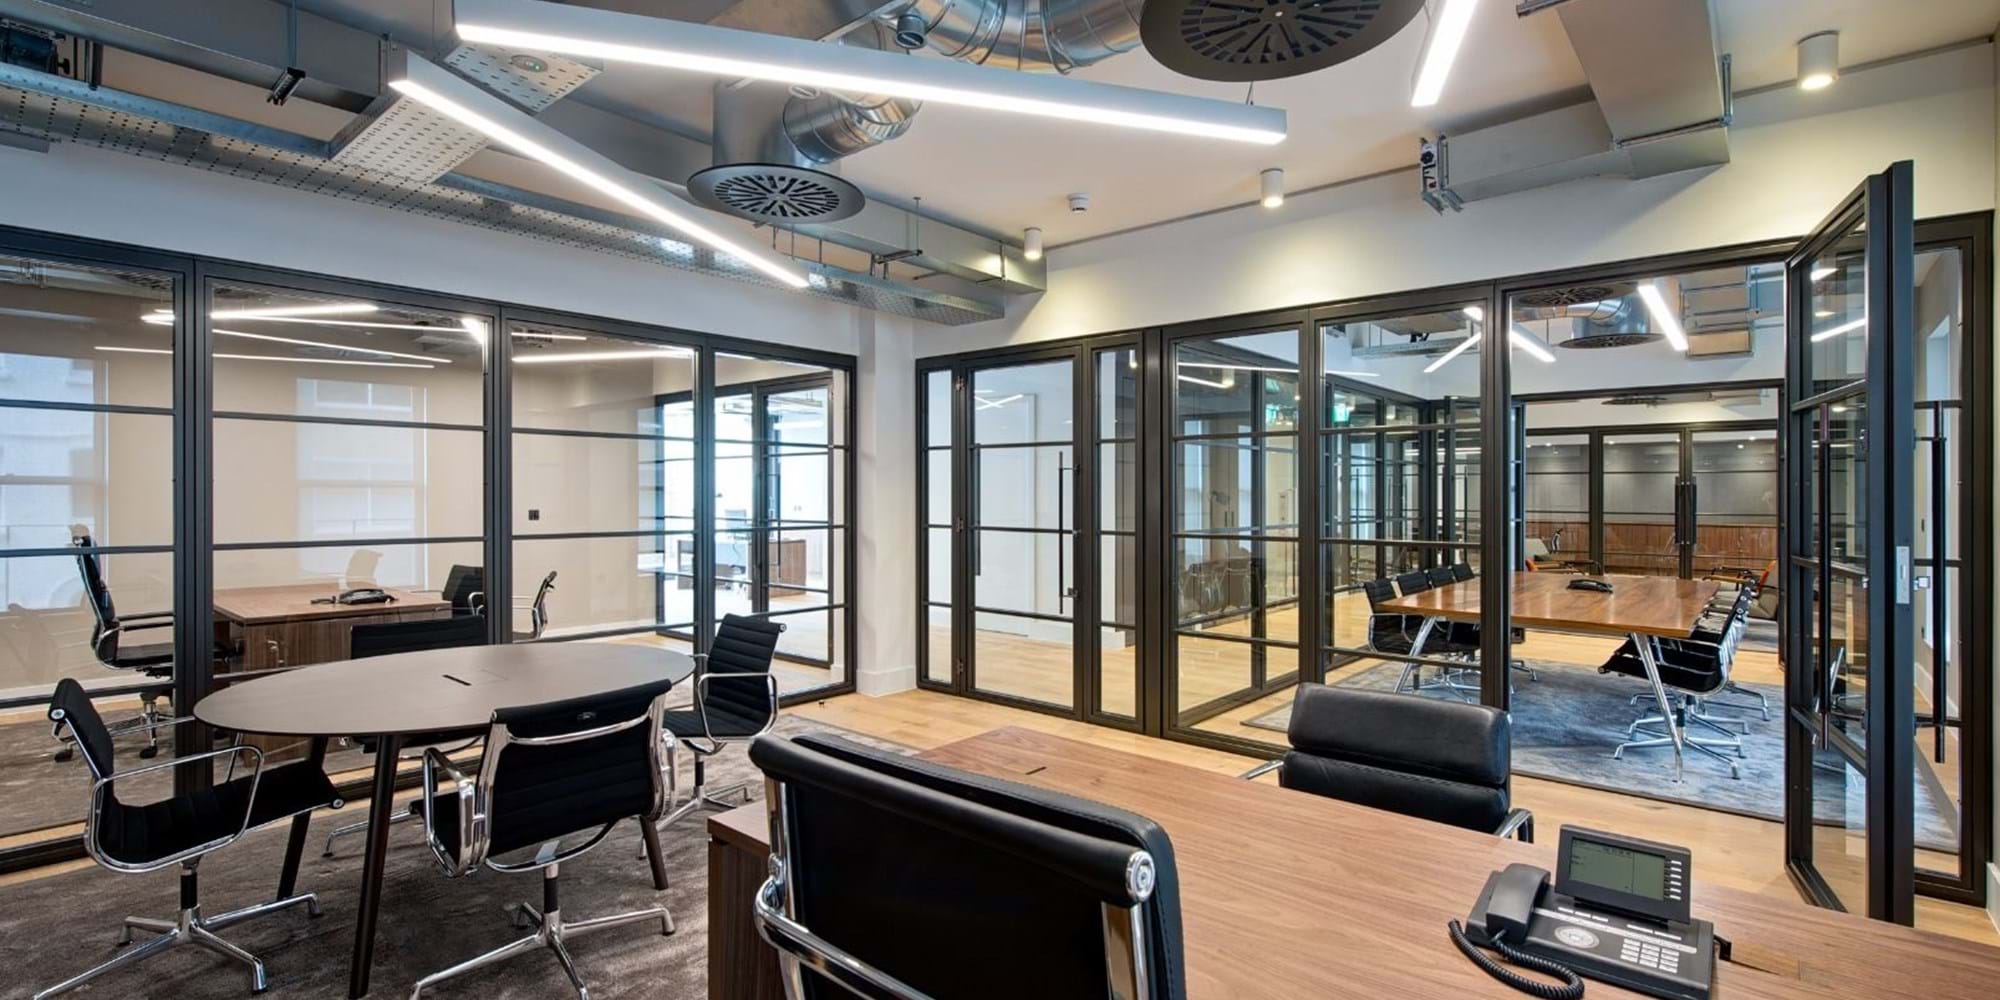 Modus Workspace office design, fit out and refurbishment - Craigewan - Graigewan 05 highres sRGB.jpg